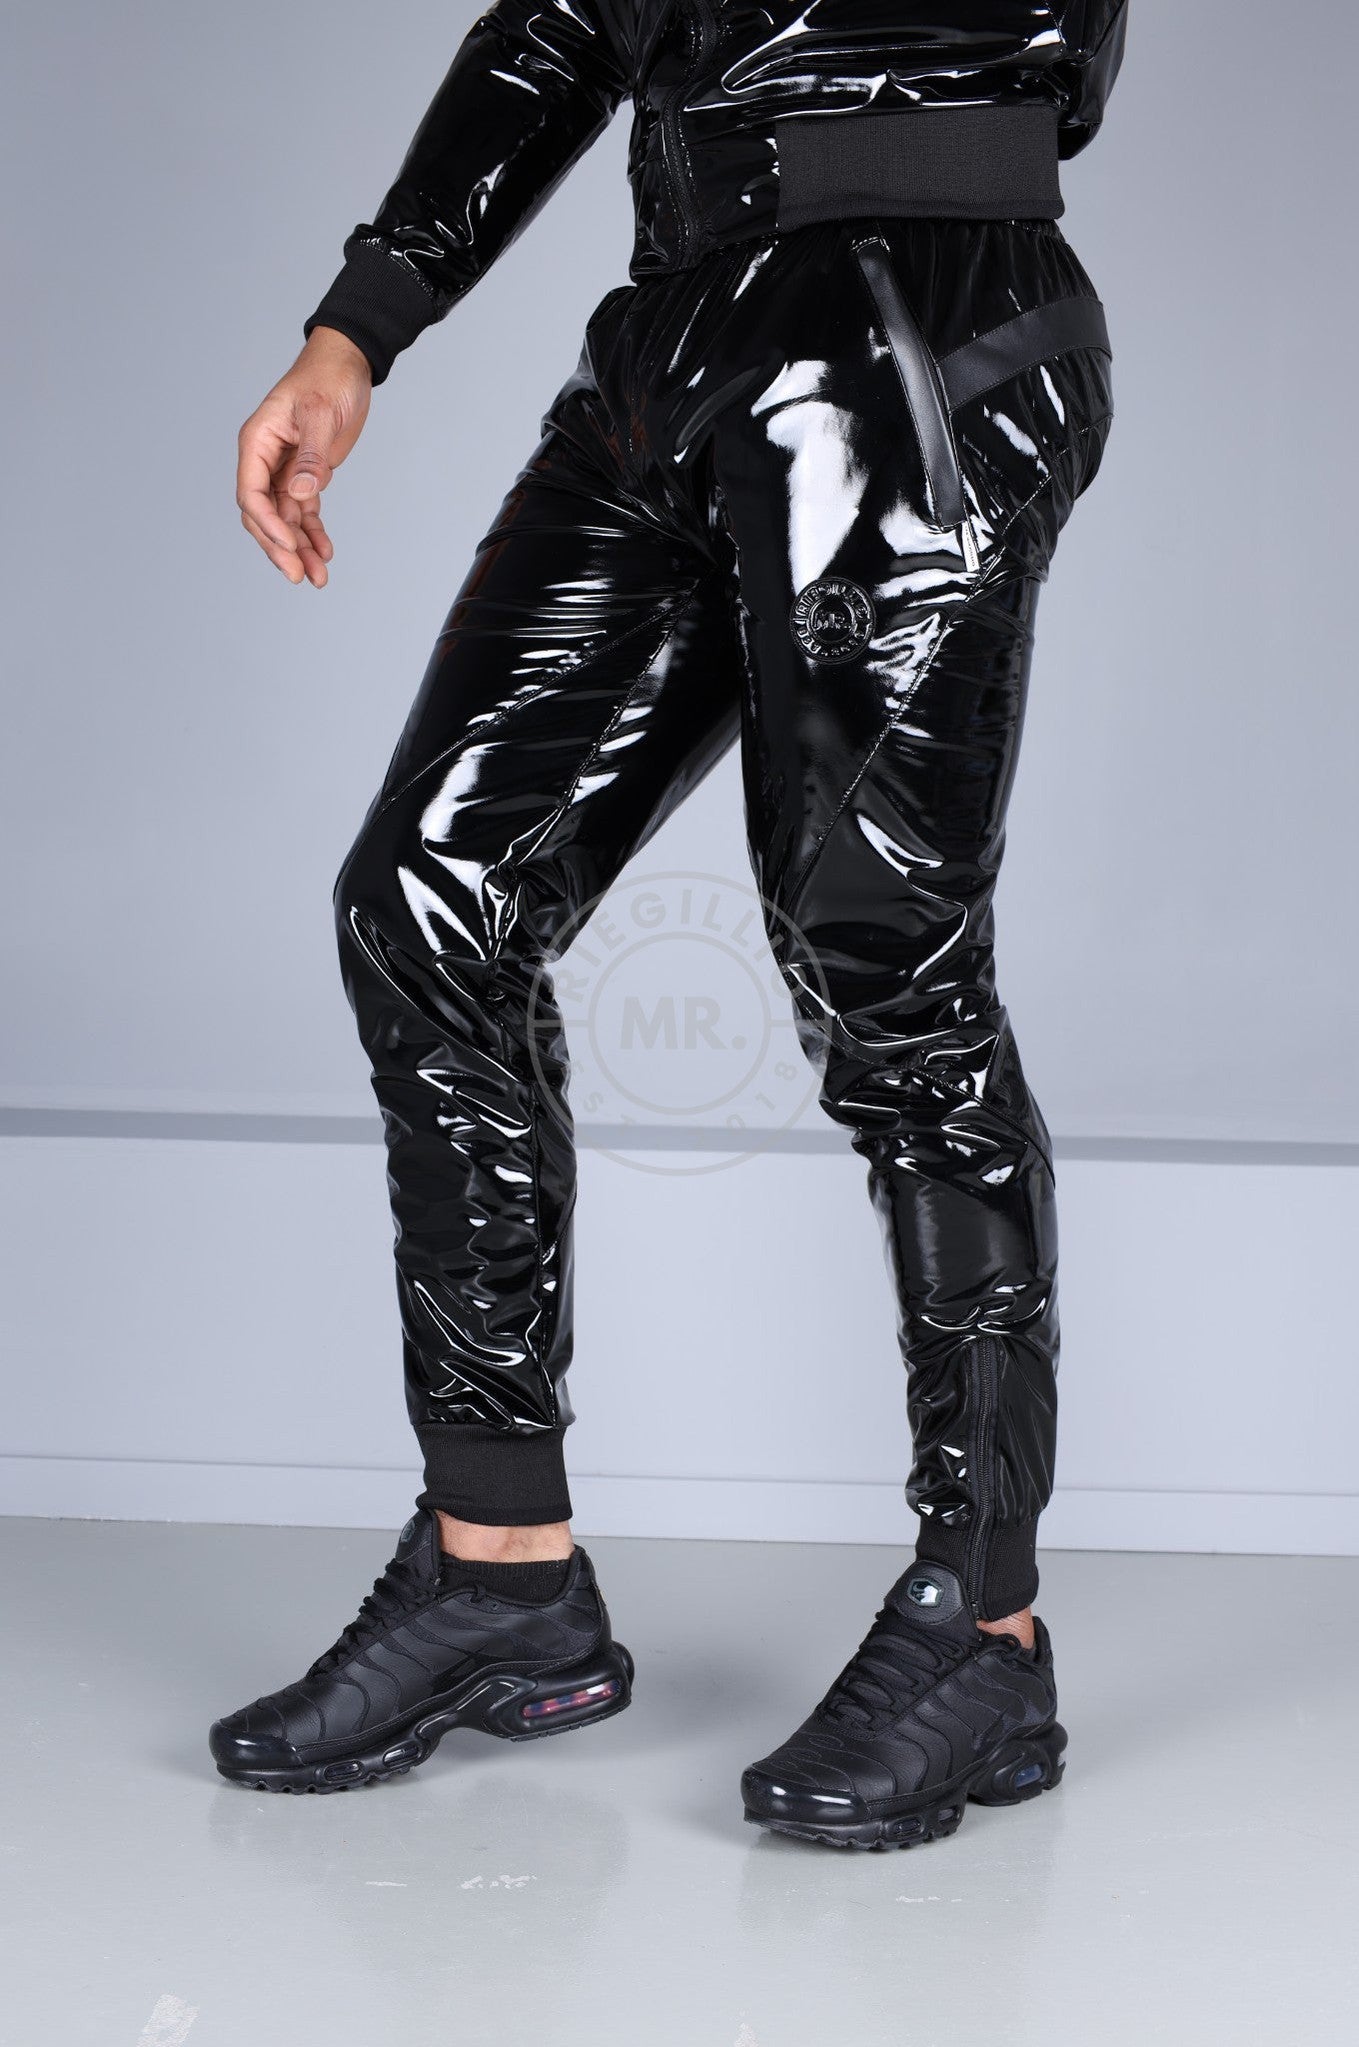 PVC 24 Tracksuit Pants - Black-at MR. Riegillio